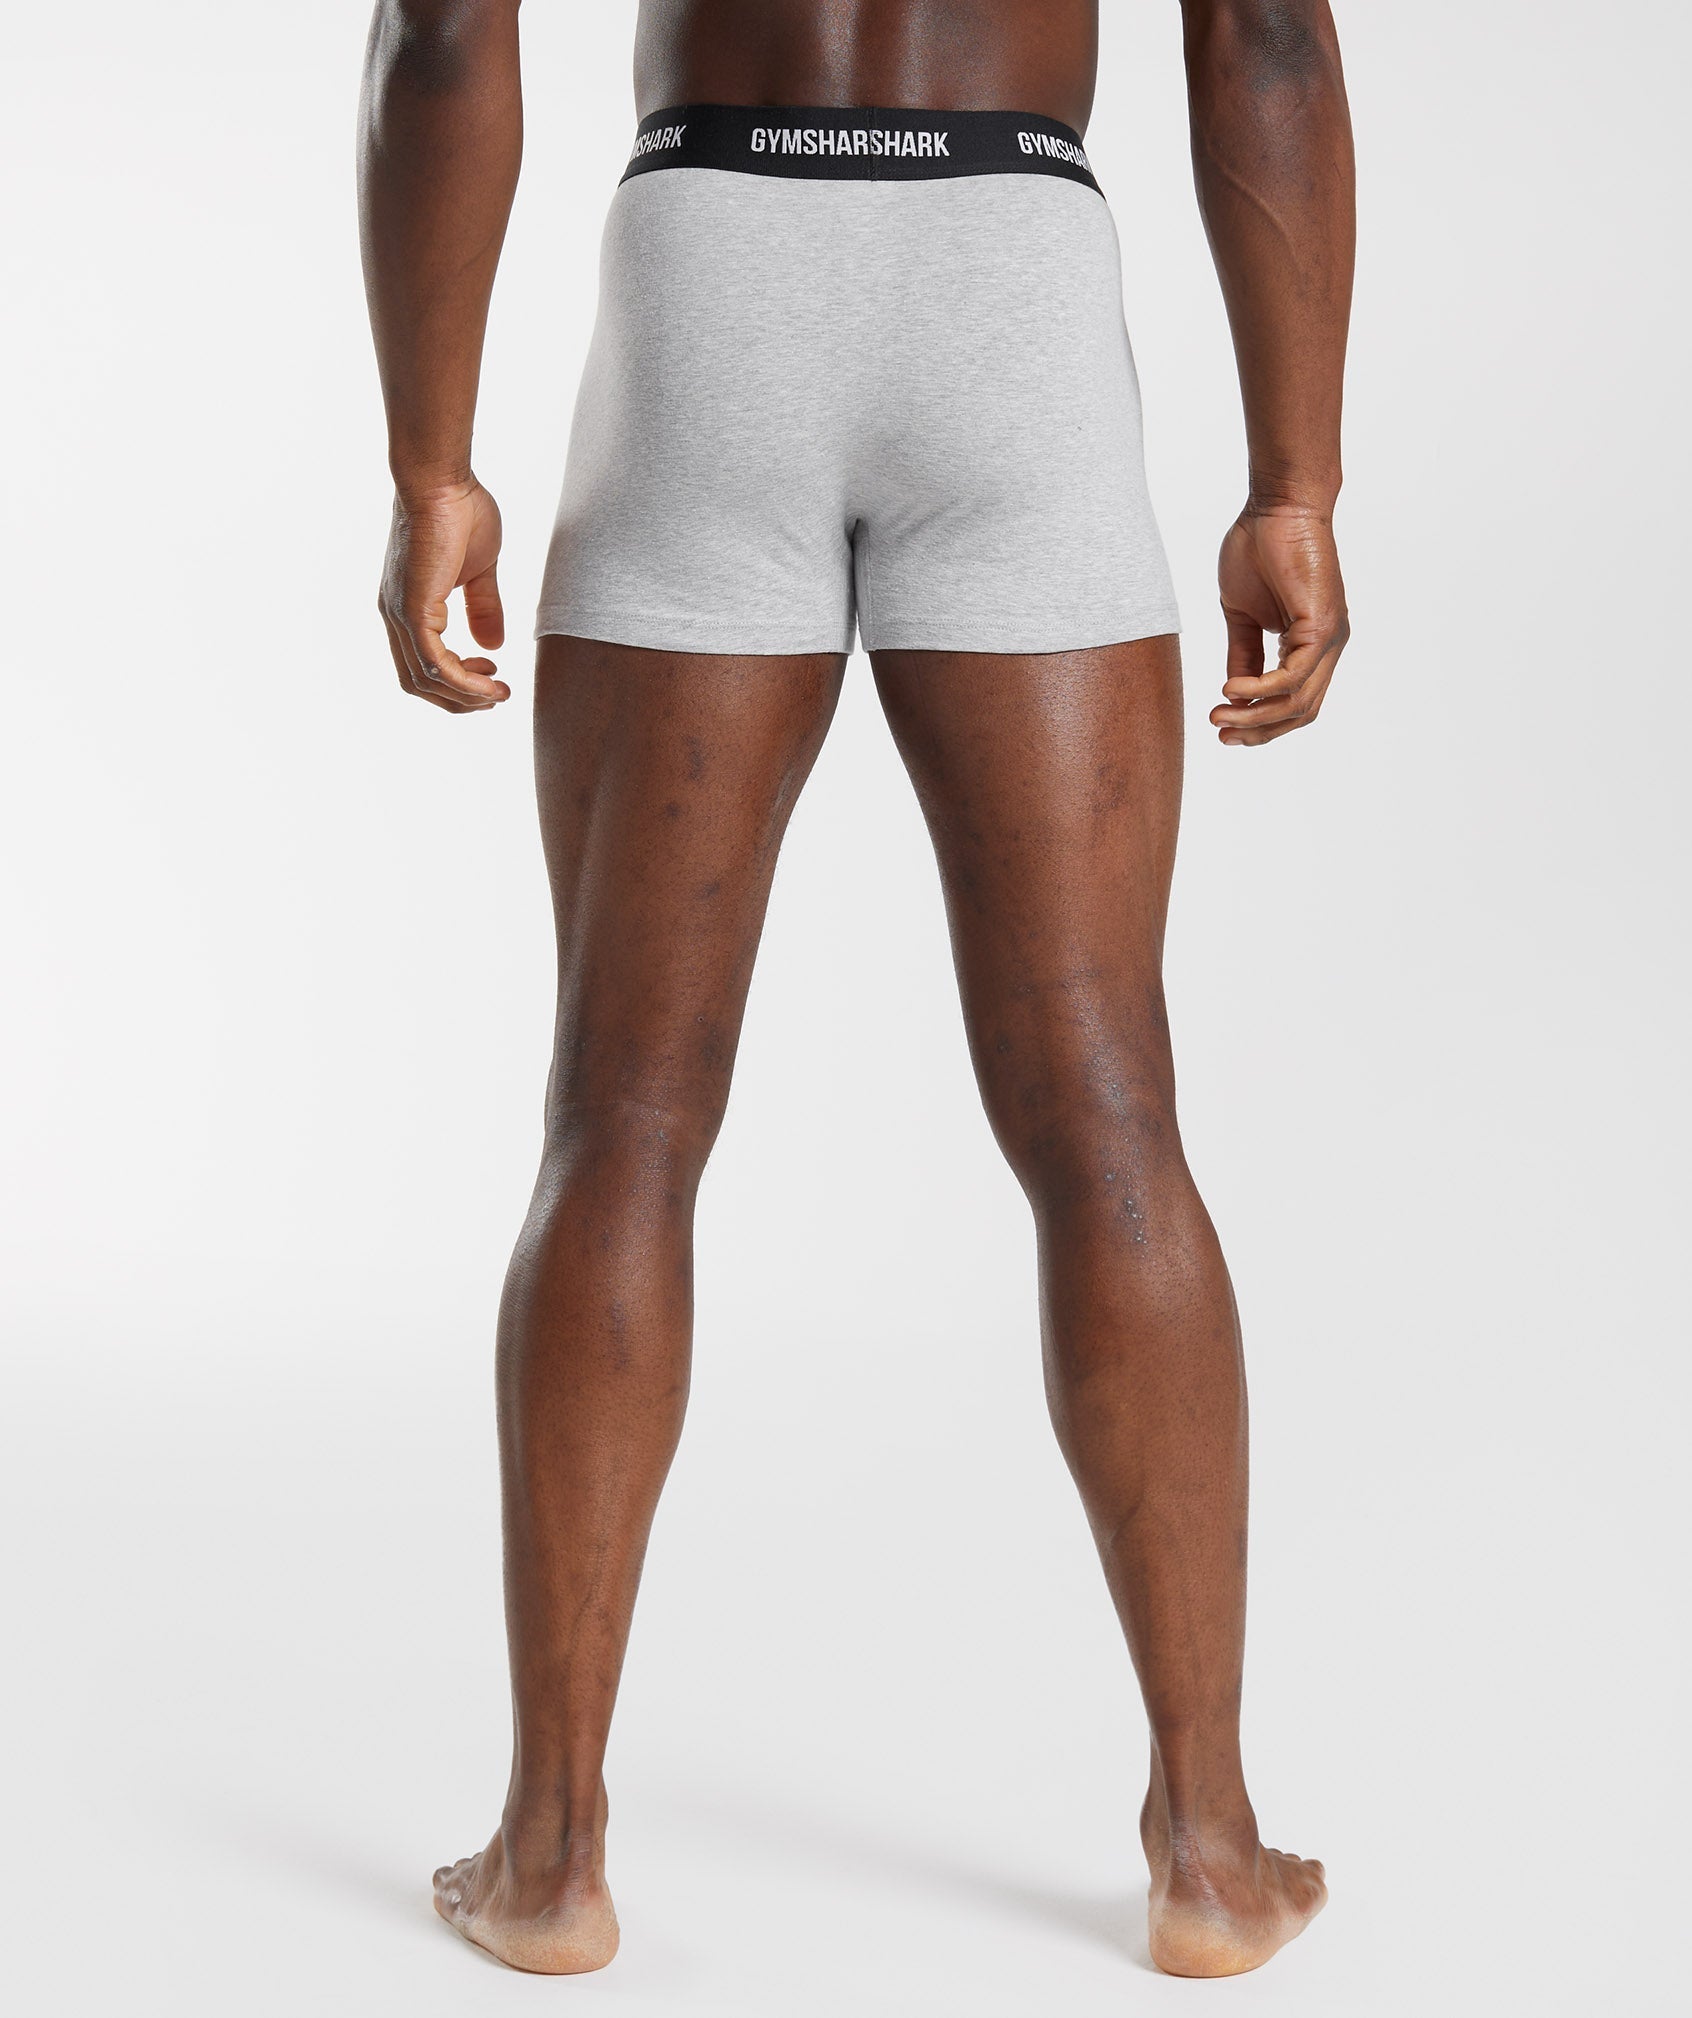 XL-7XL, Men's Underwear Boxer Long Leg Fitness Sport Shorts for